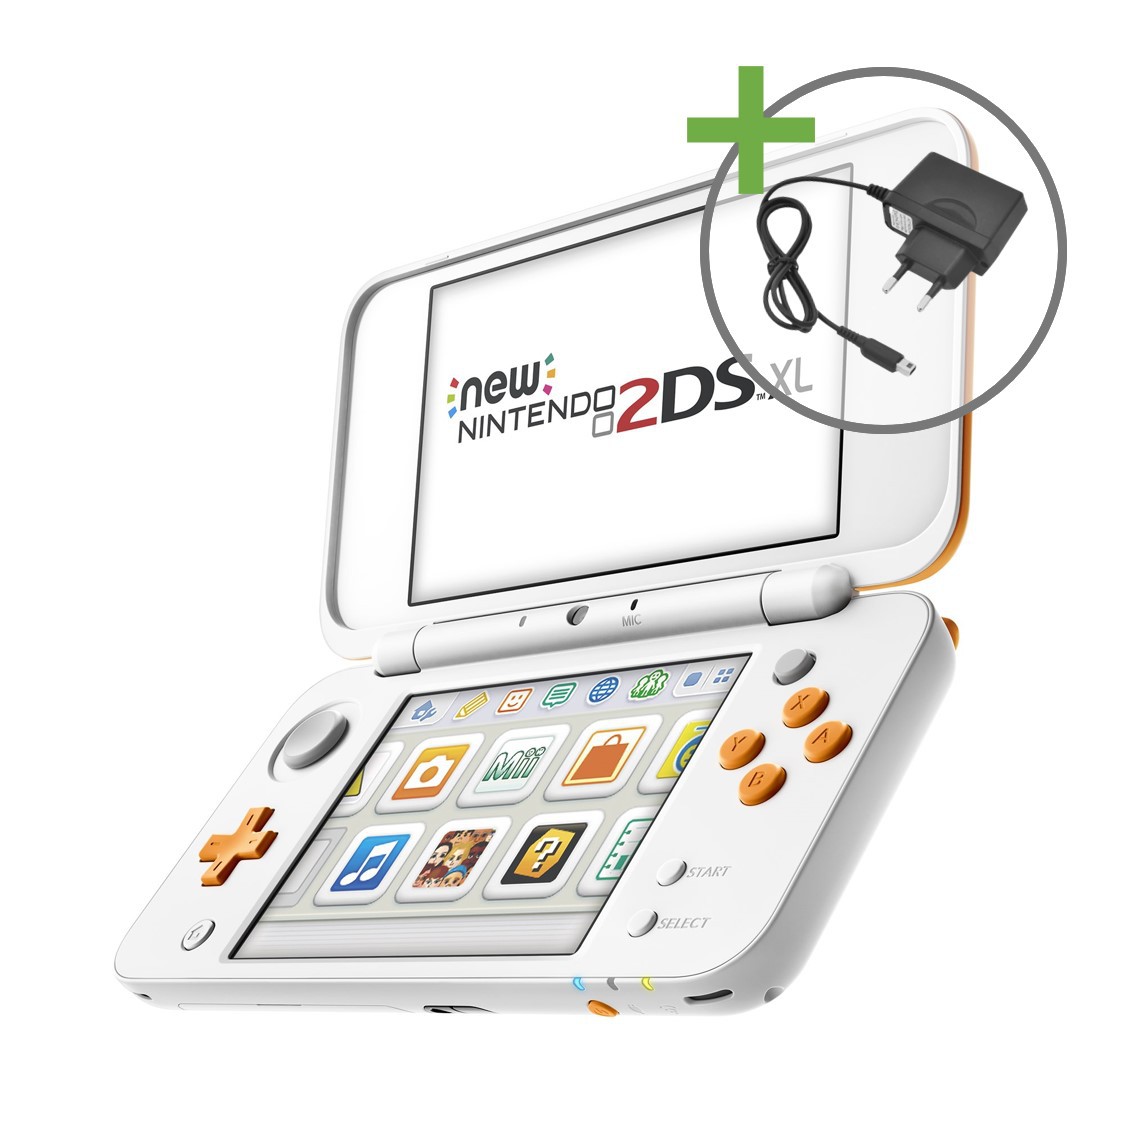 New Nintendo 2DS XL - White/Orange - Nintendo 3DS Hardware